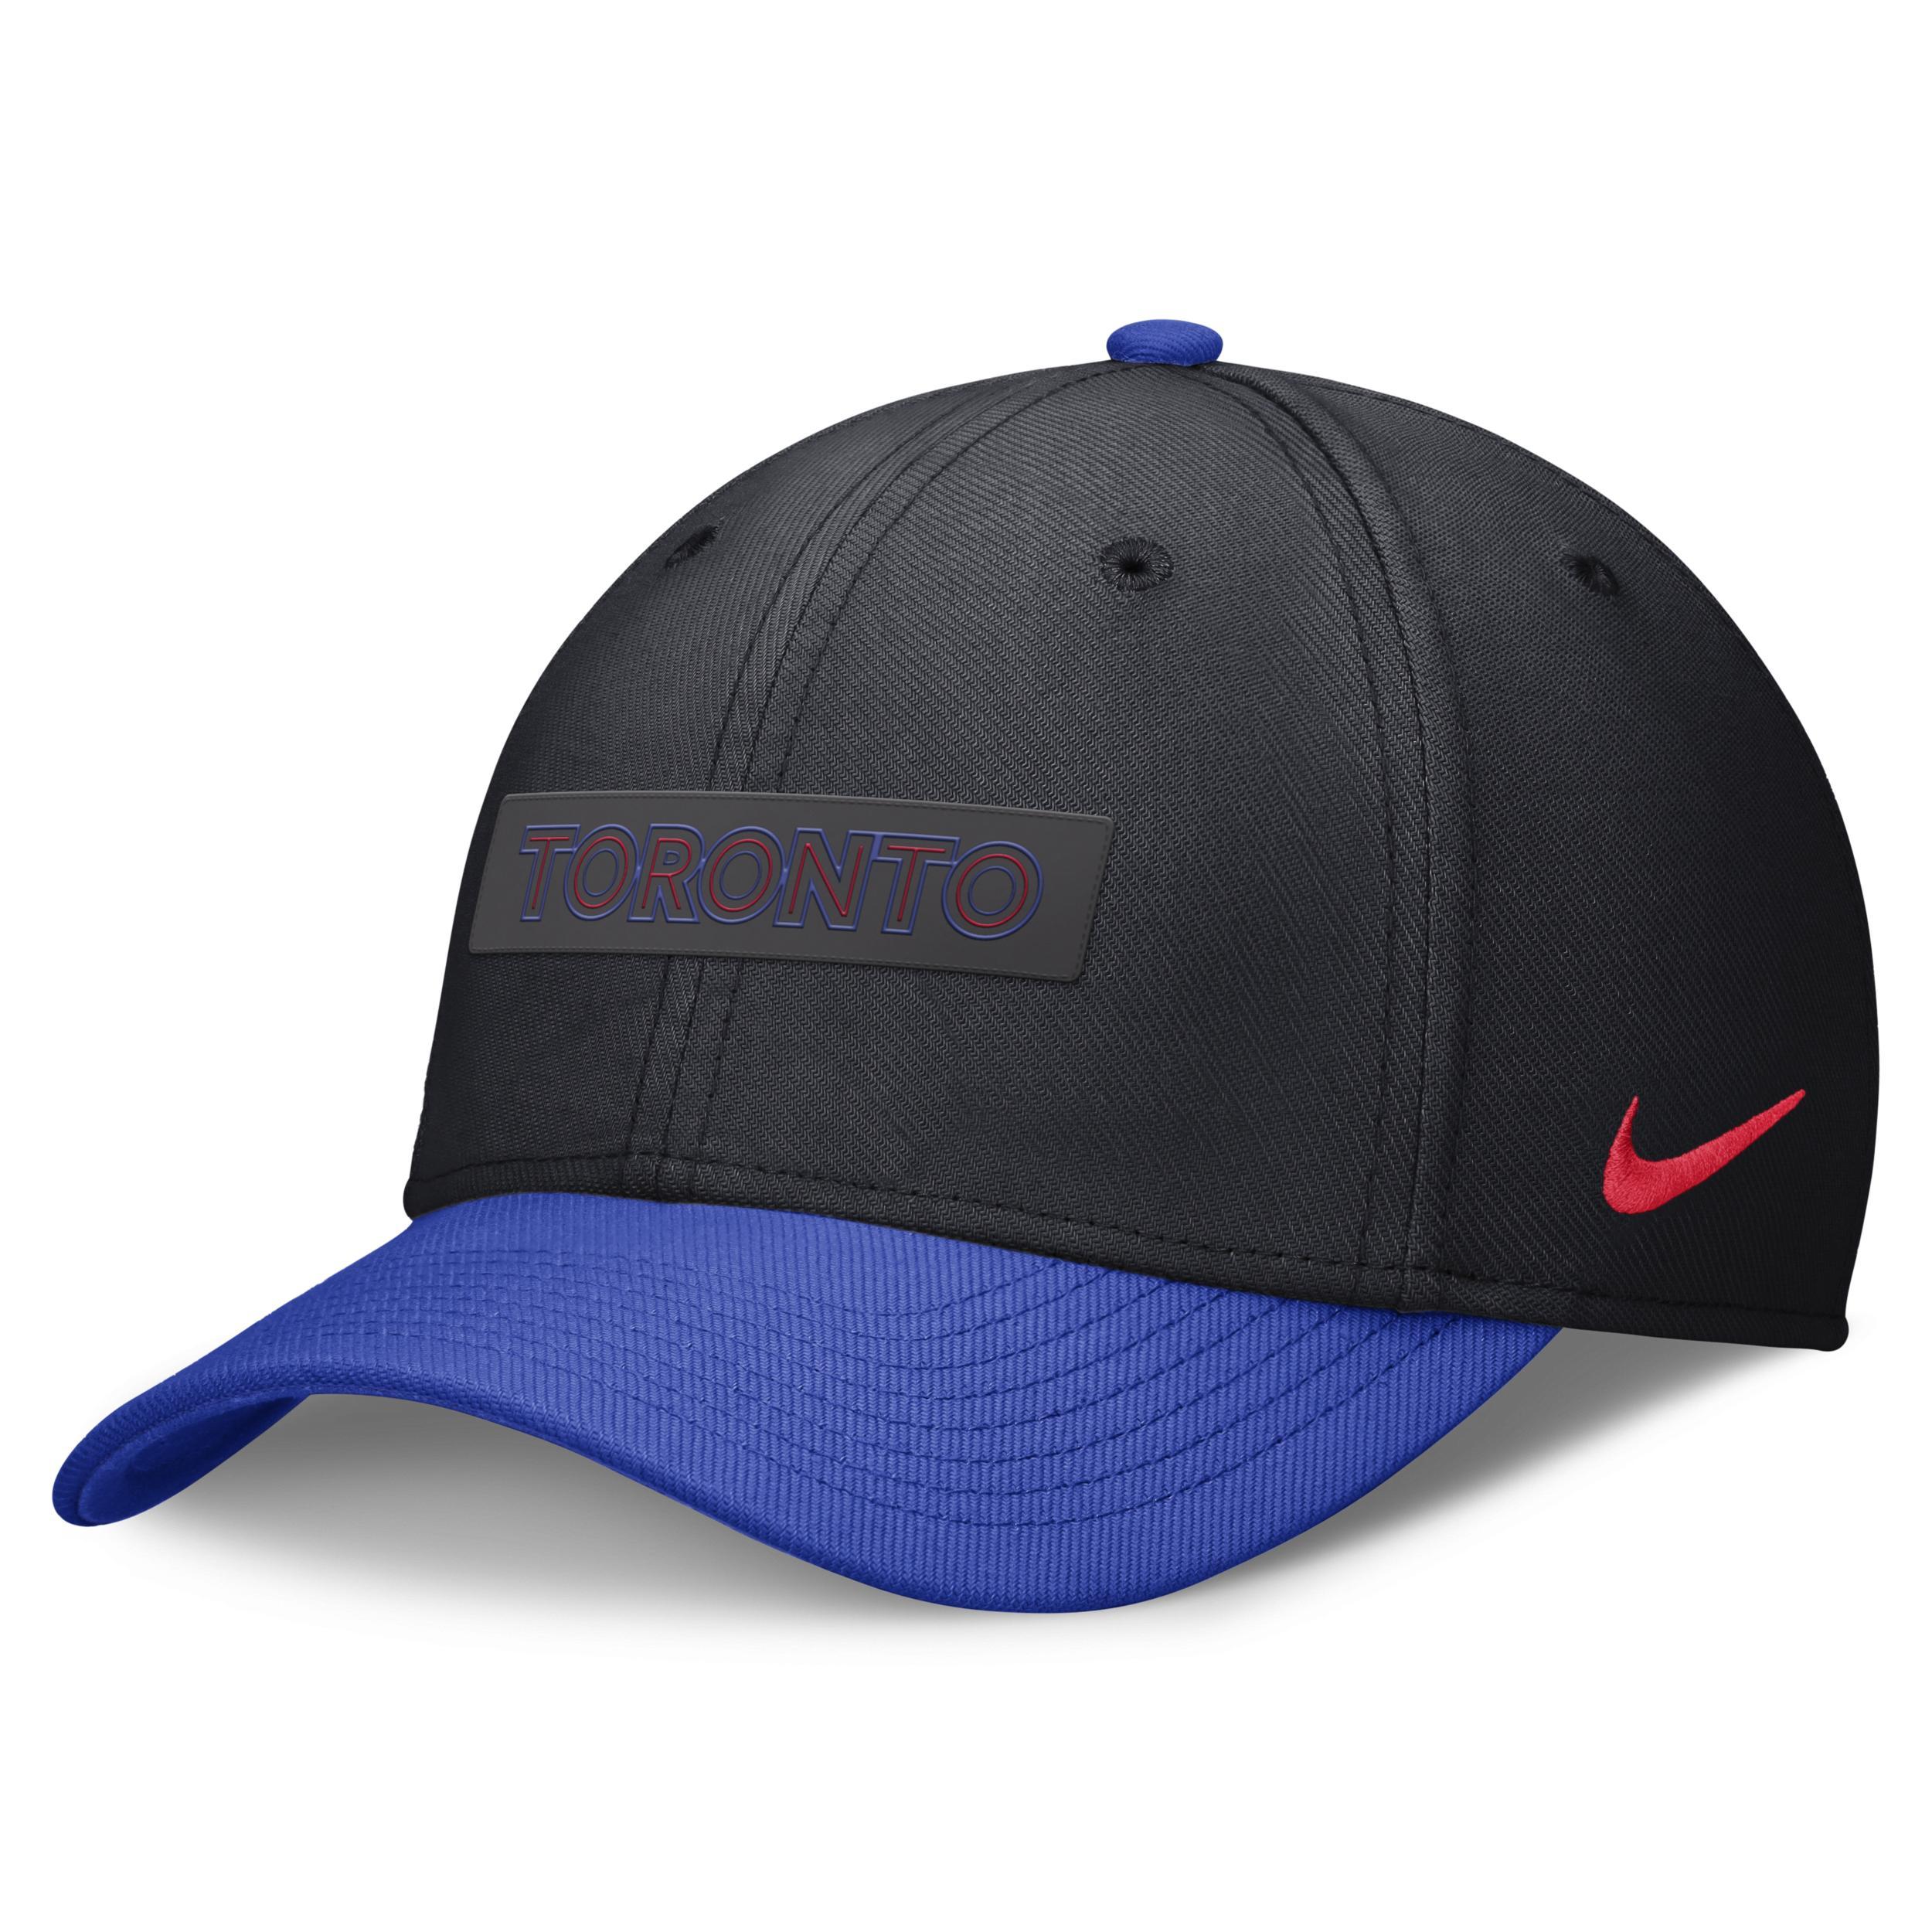 St. Louis Cardinals Statement Swoosh Nike Men's Dri-FIT MLB Hat Product Image